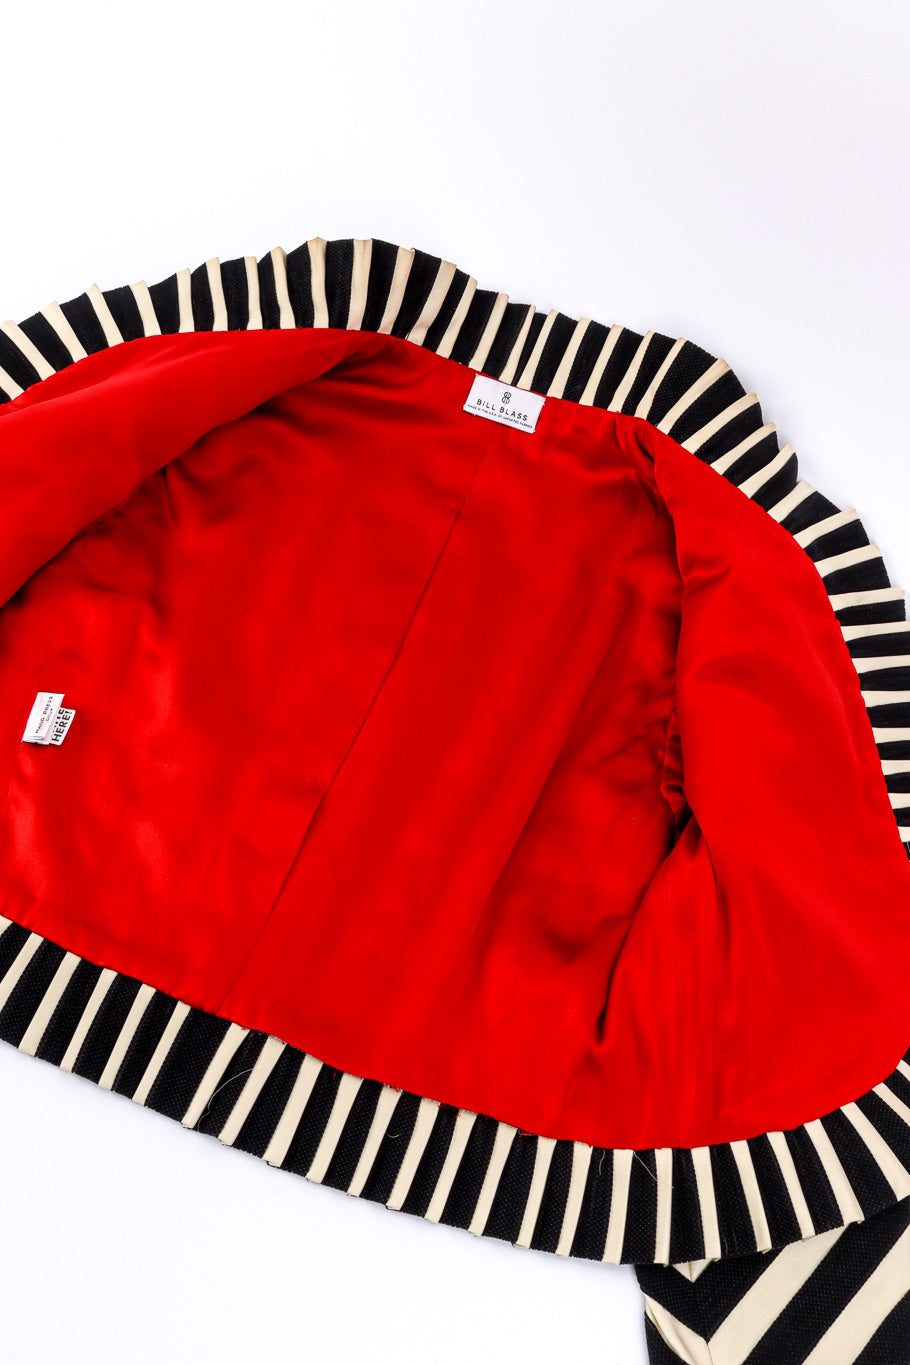 Vintage Bill Blass Striped Bolero Jacket view of lining @recessla